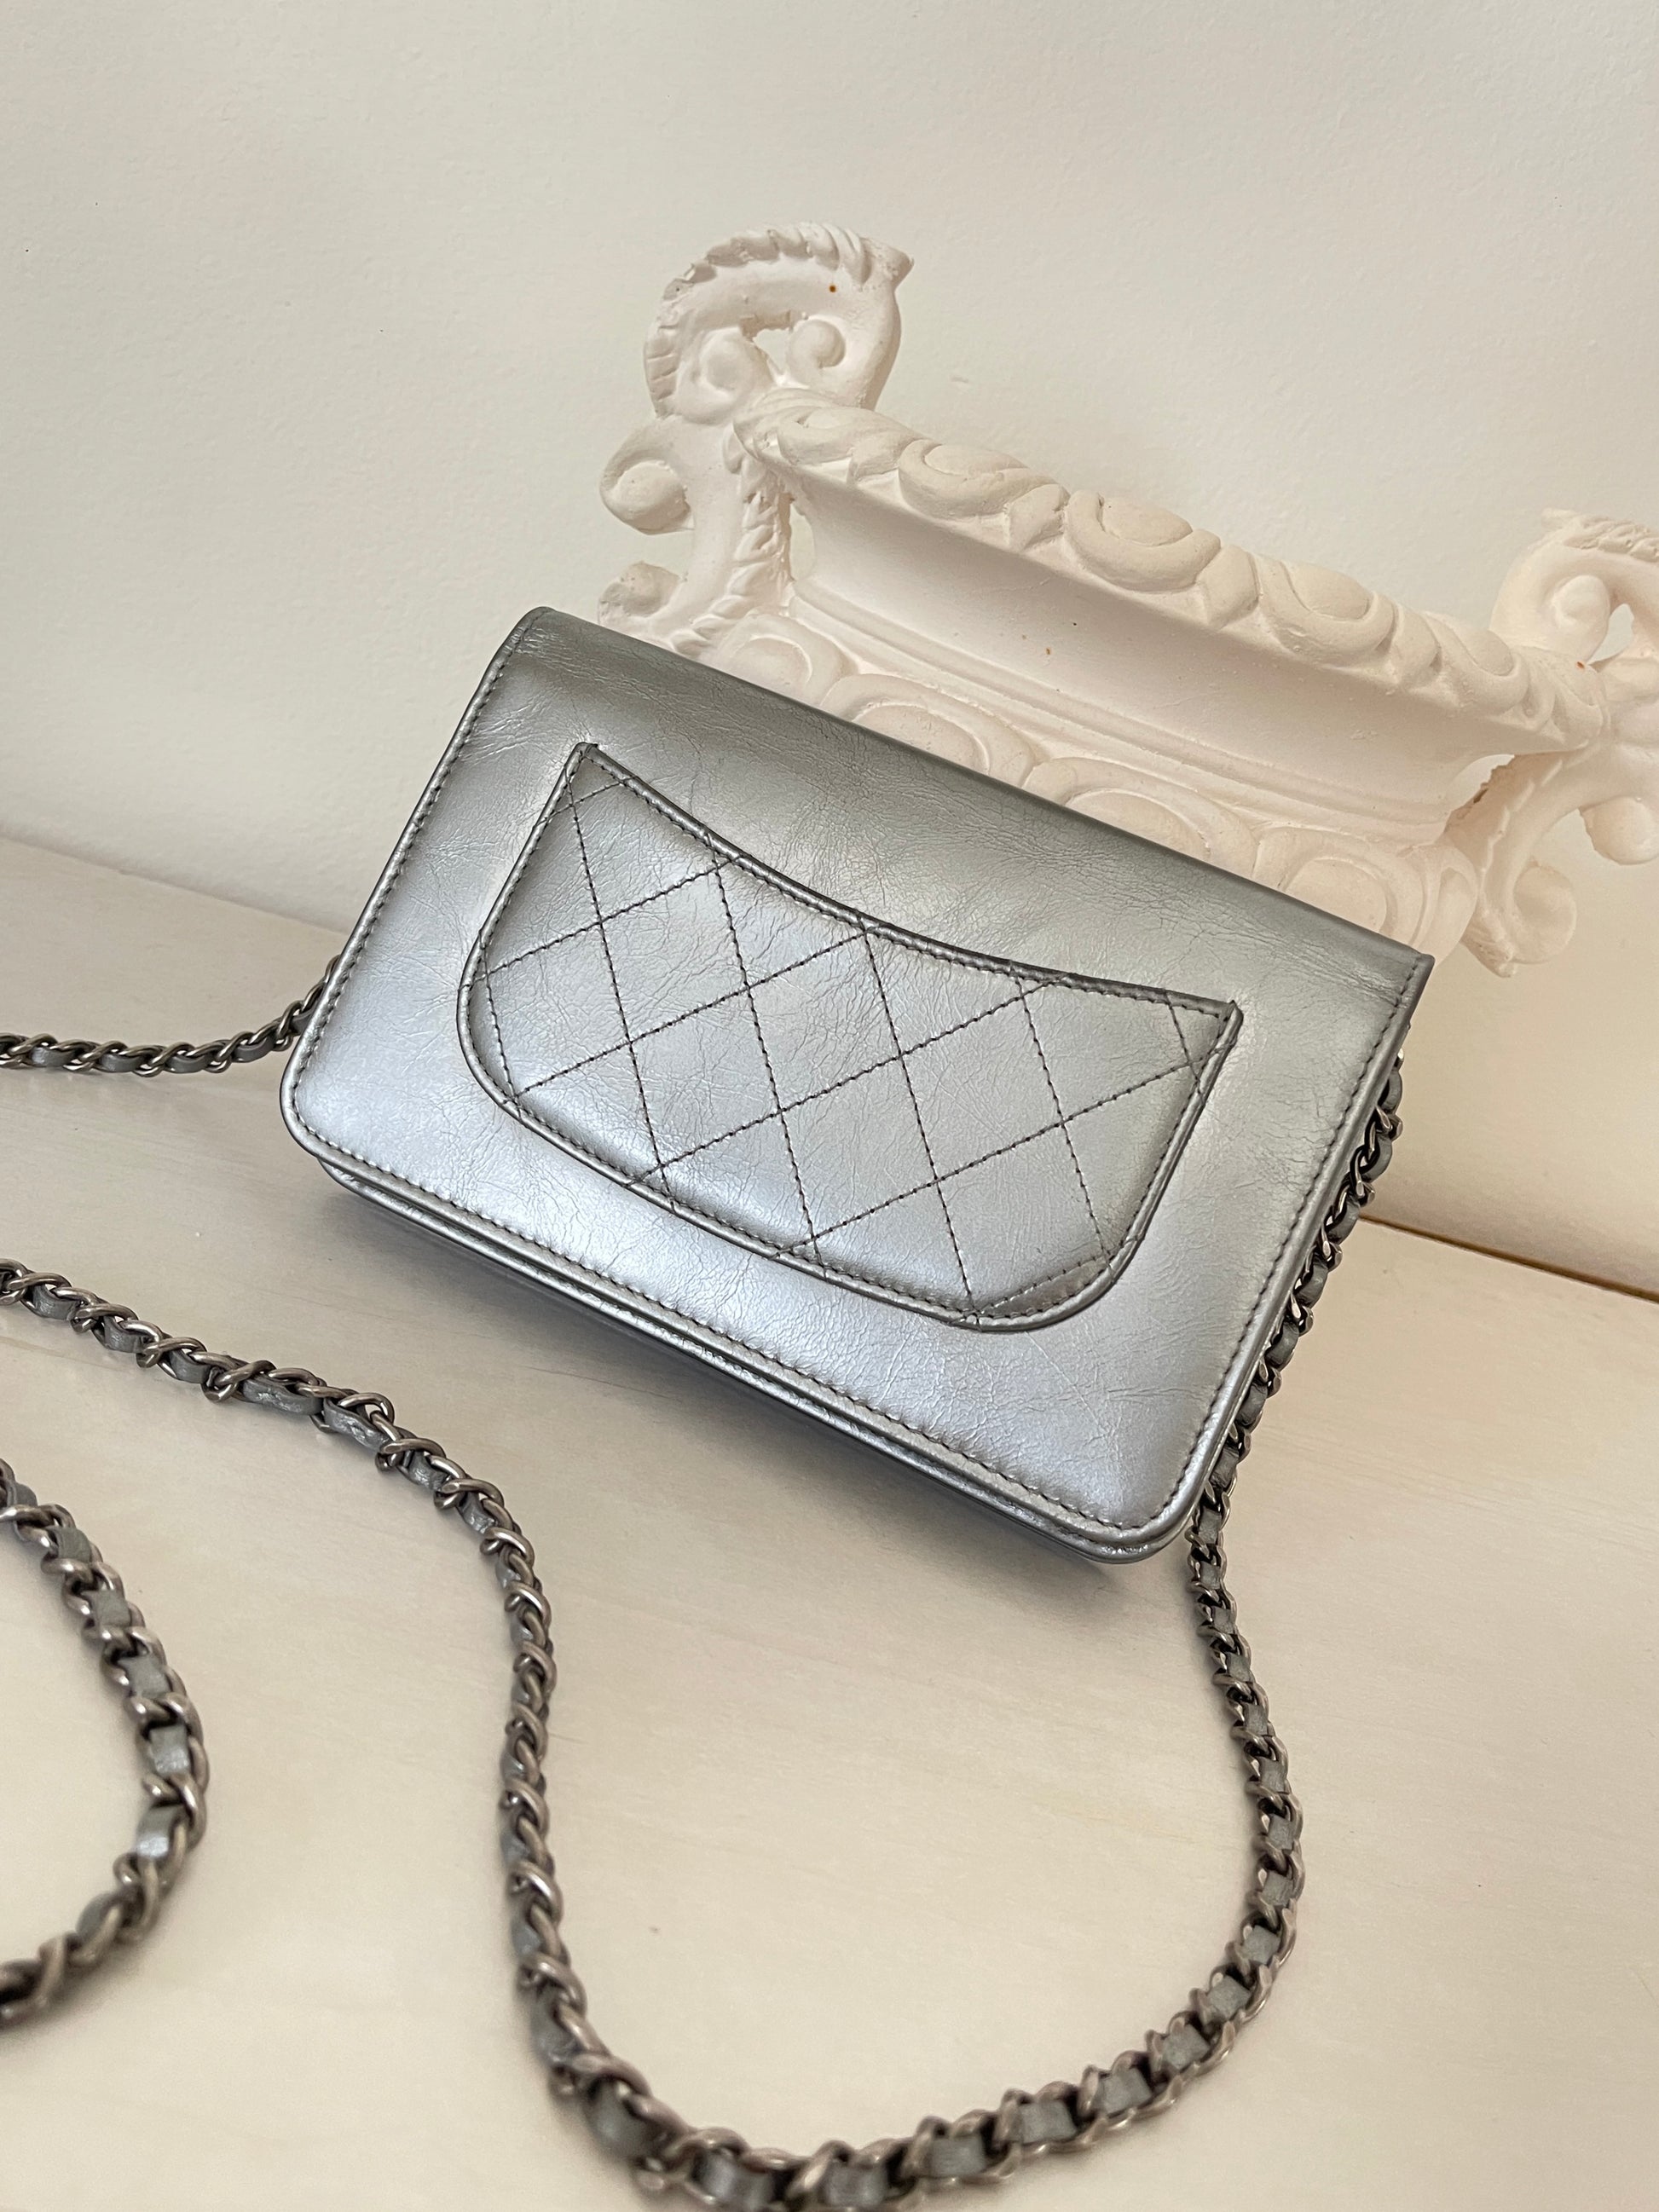 chanel wallet on chain metallic